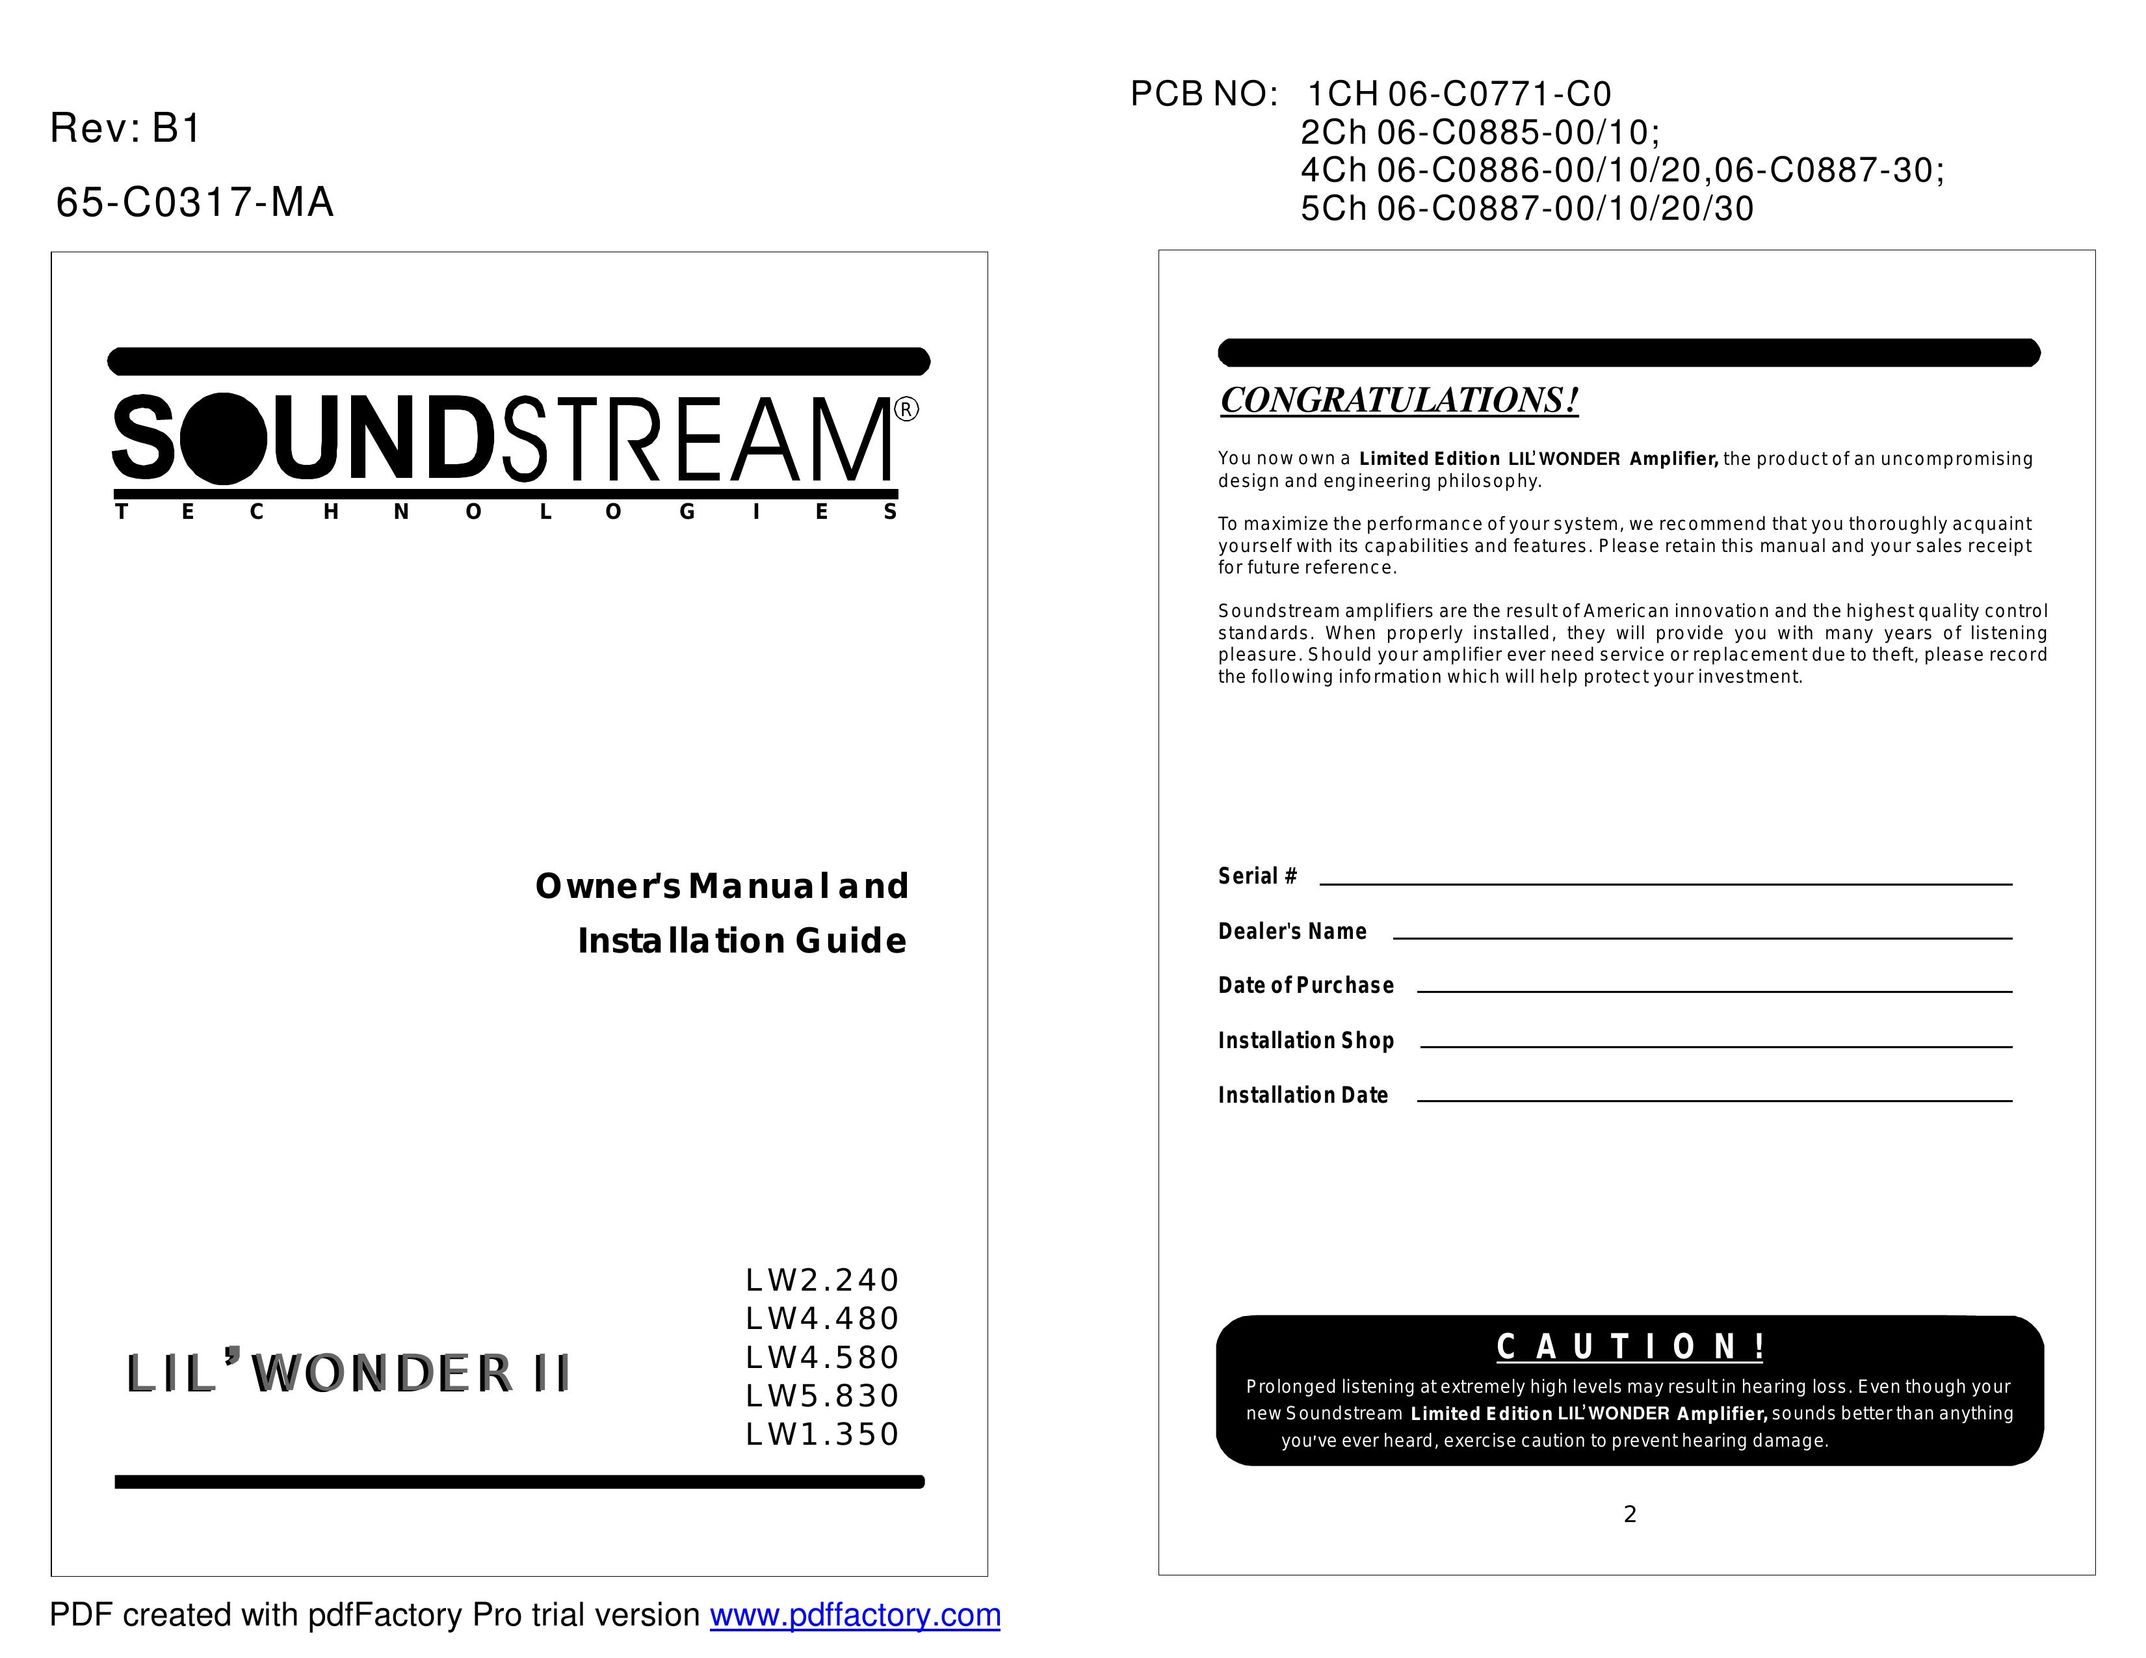 Soundstream Technologies LW4.580 Stereo Amplifier User Manual